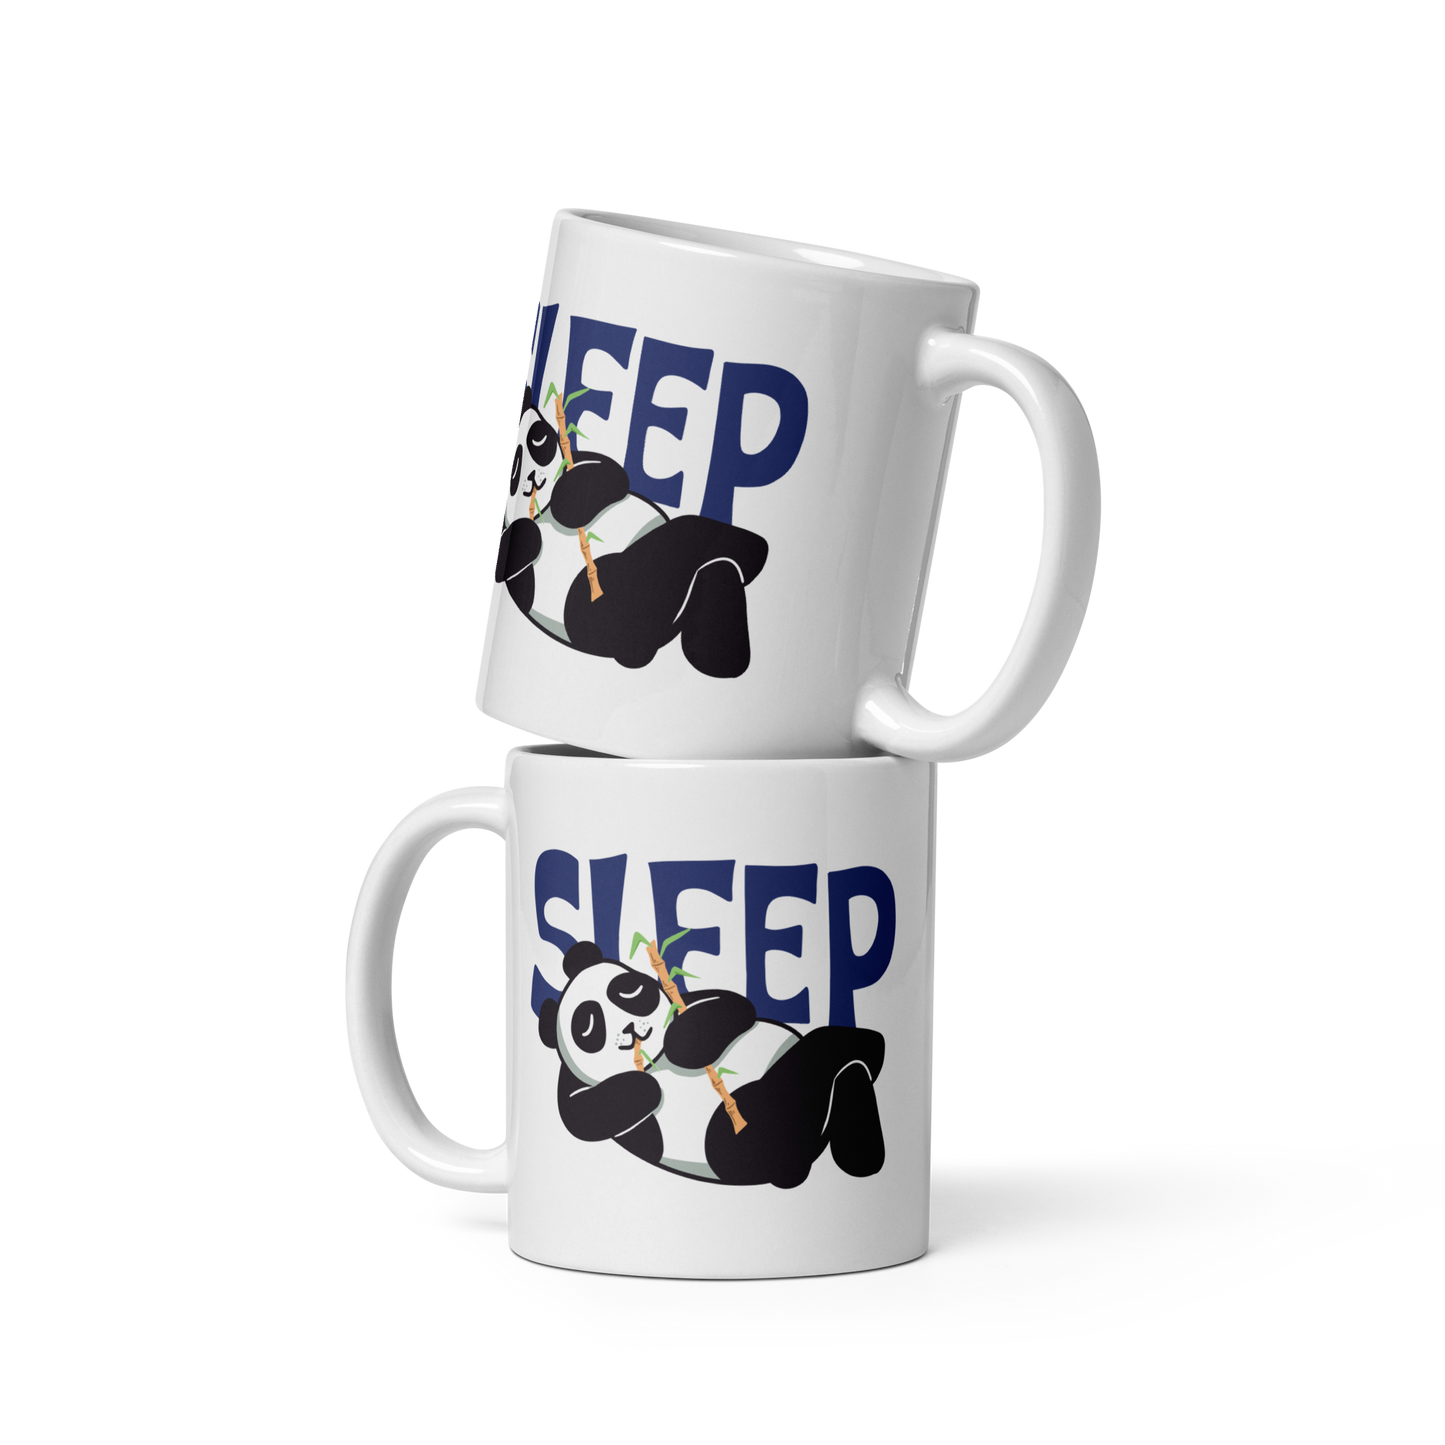 Sleep shirt panda | White glossy mug